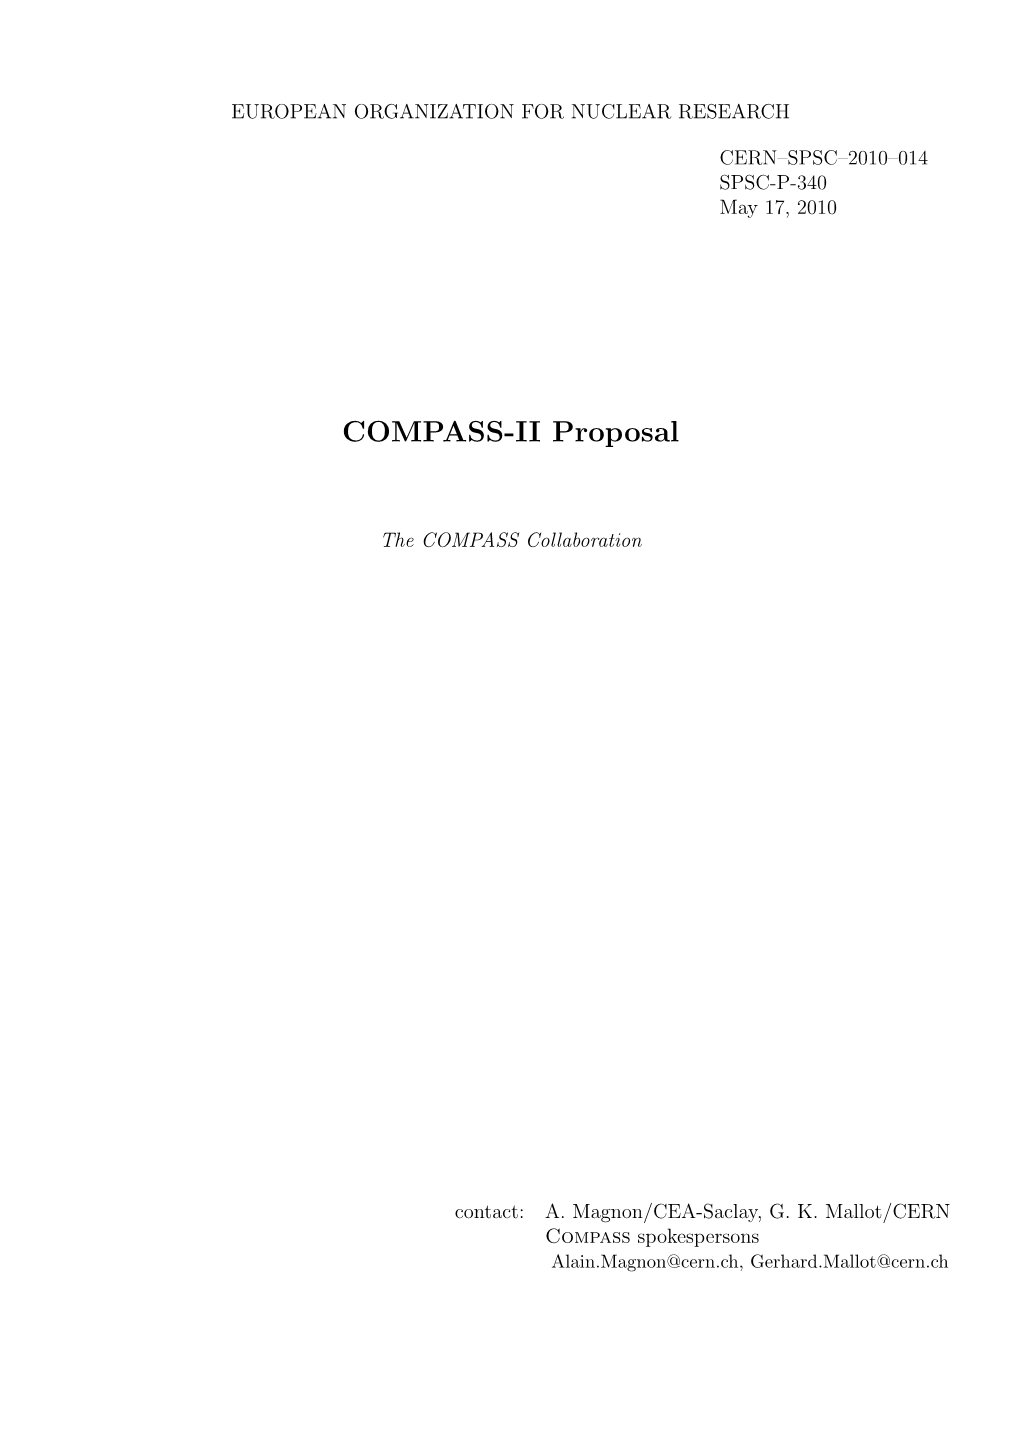 COMPASS-II Proposal